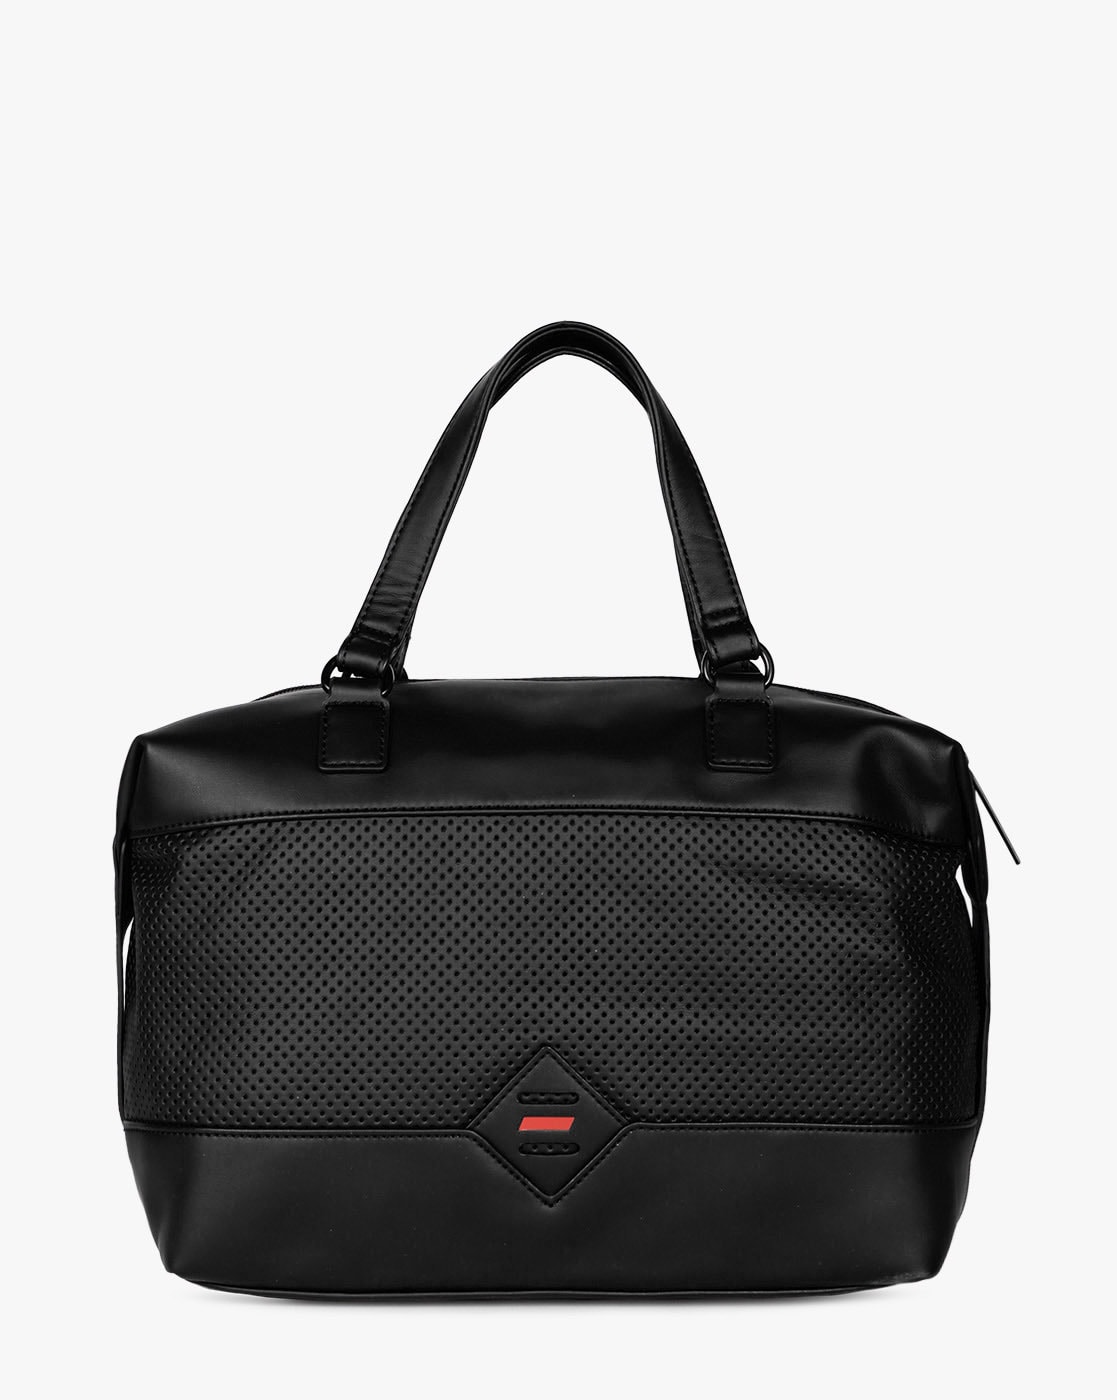 PUMA Ferrari LS SHOPPER Bag PUMA Black 074823 01 for sale online | eBay